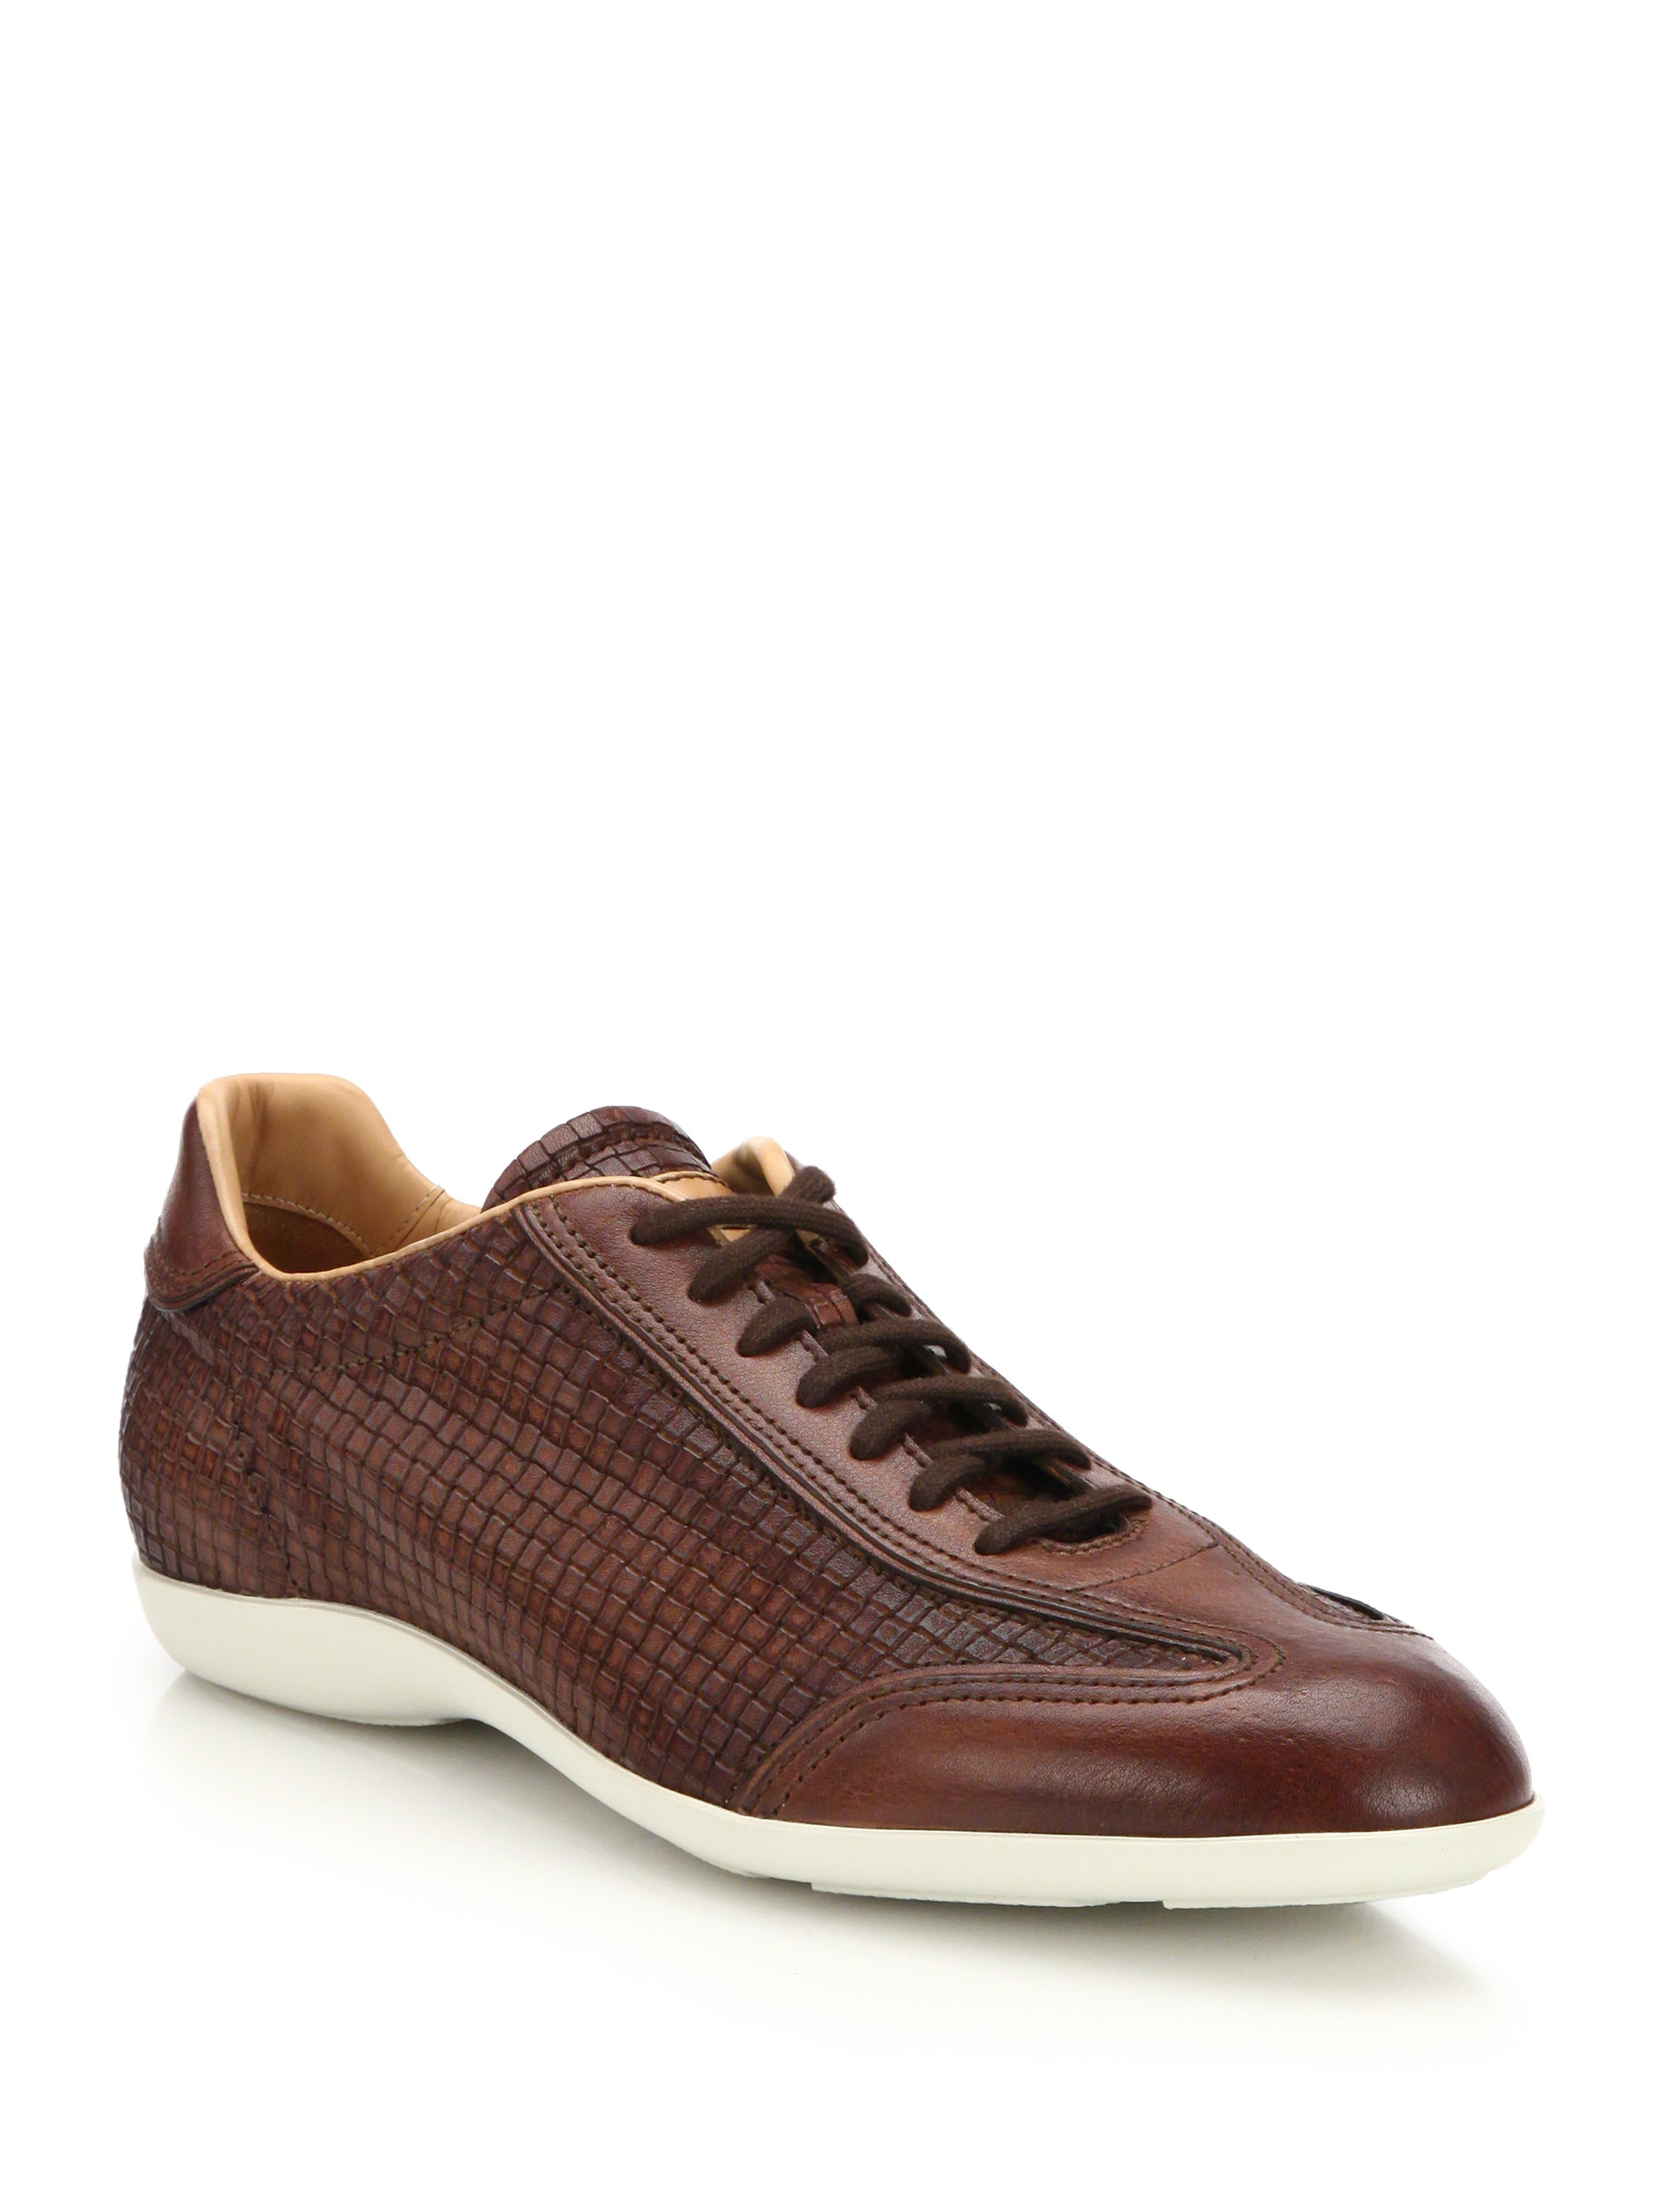 Lyst - Santoni Textured Leather Low-top Sneakers in Brown for Men